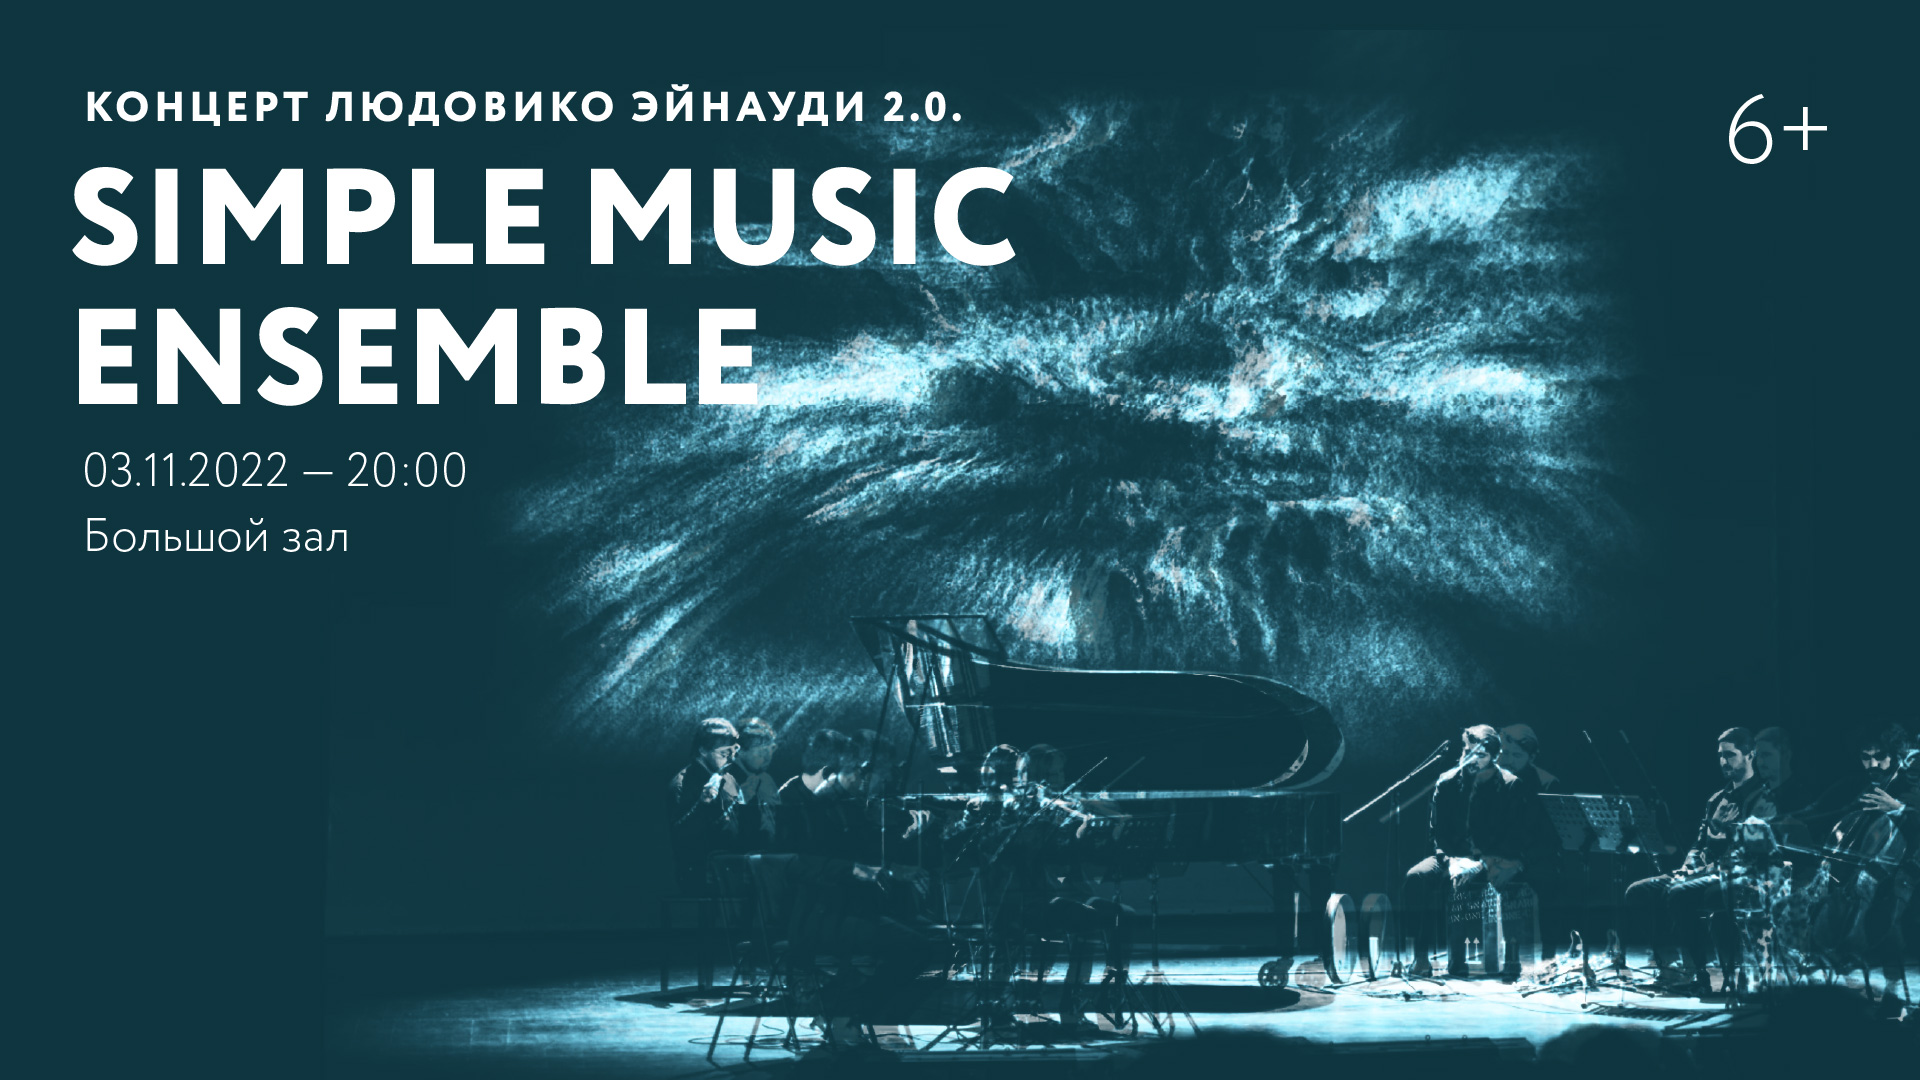 Концерт Людовико Эйнауди 2.0. Simple Music Ensemble